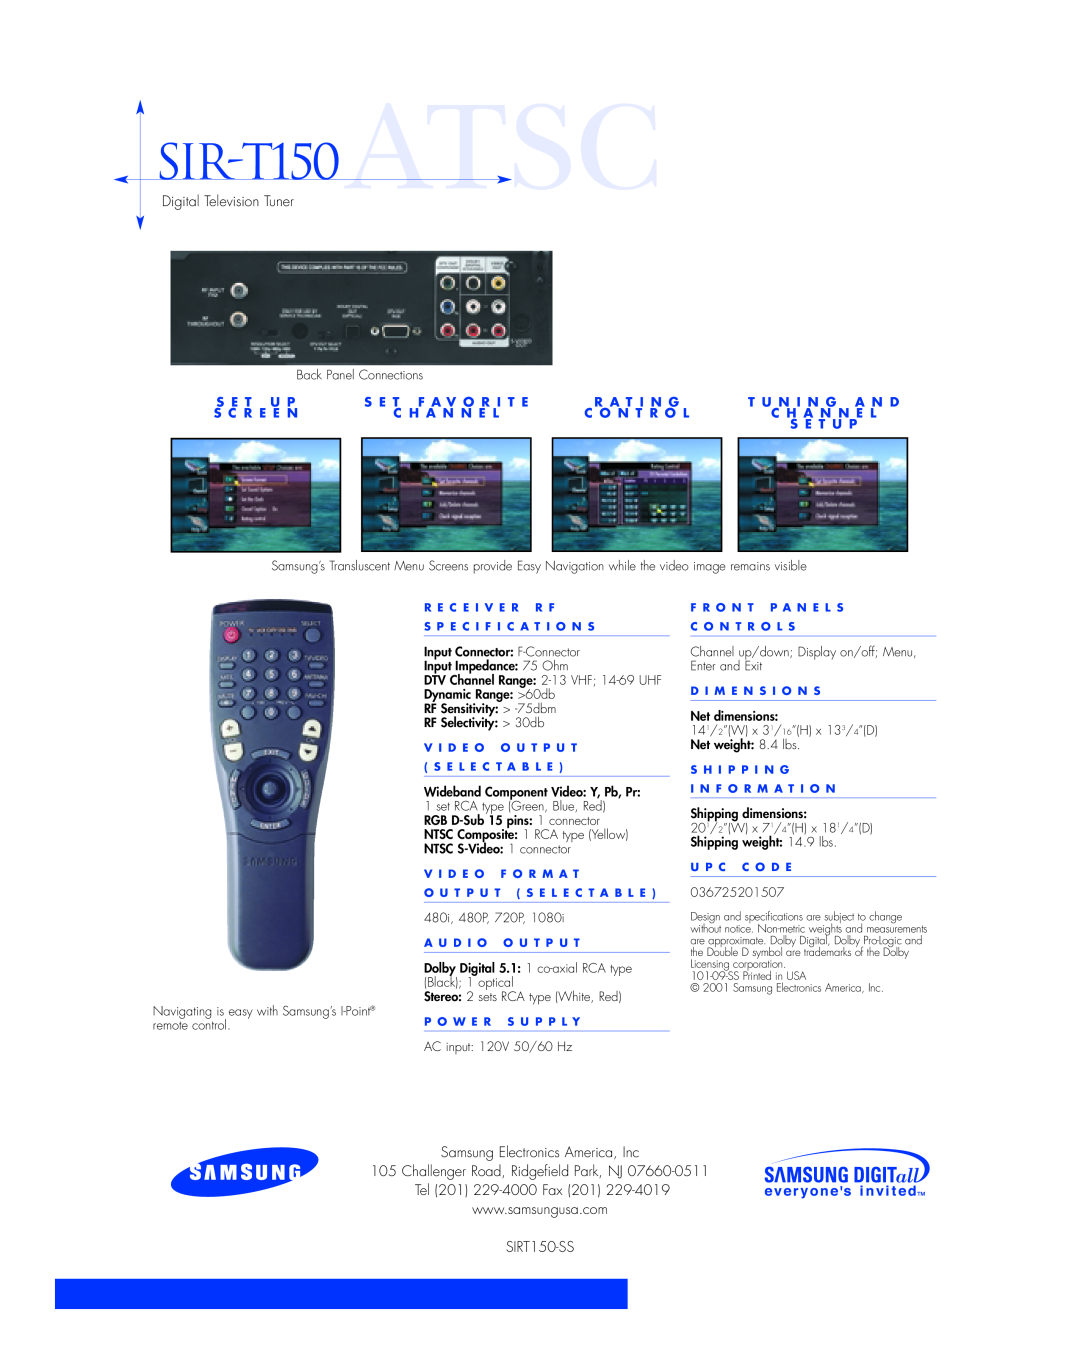 Samsung ATSCSIR-T150 manual SIR-T150 ATSC, Digital Television Tuner, Samsung Electronics America, Inc, SIRT150-SS 